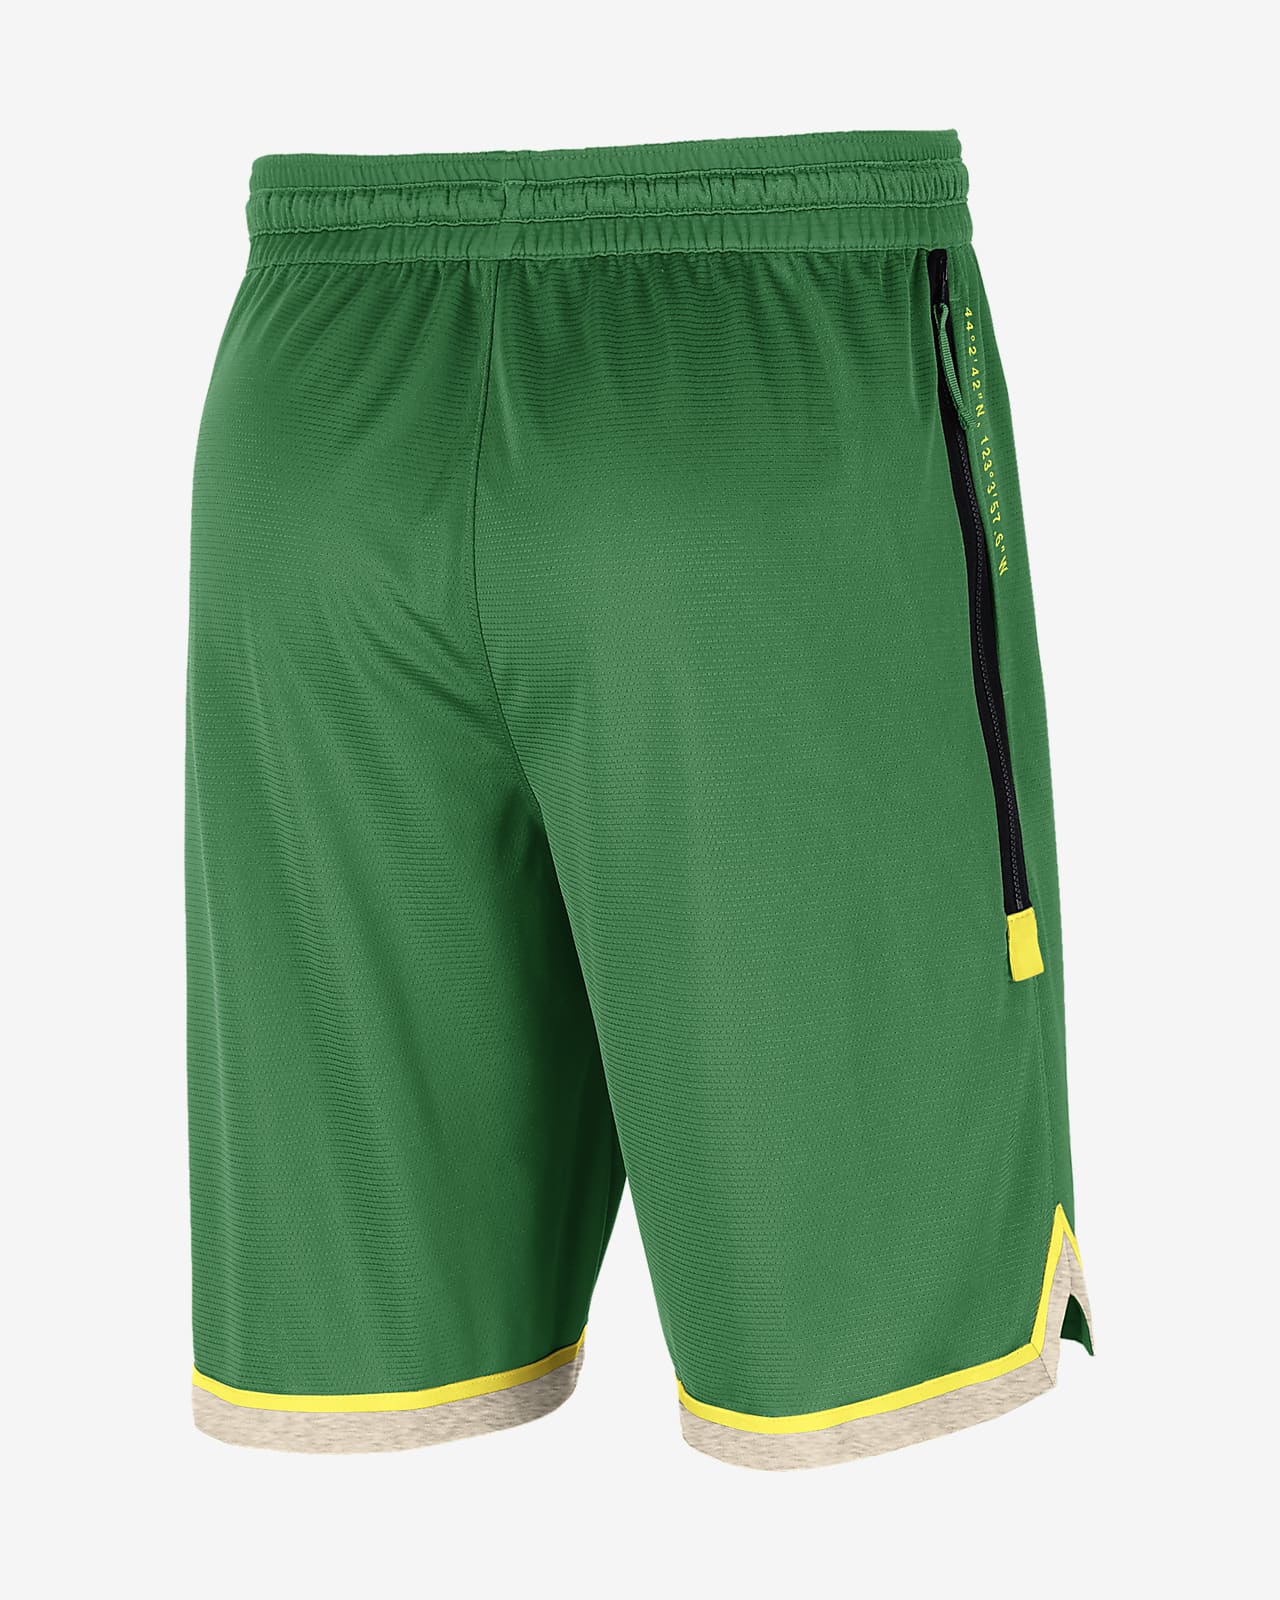 oregon basketball shorts